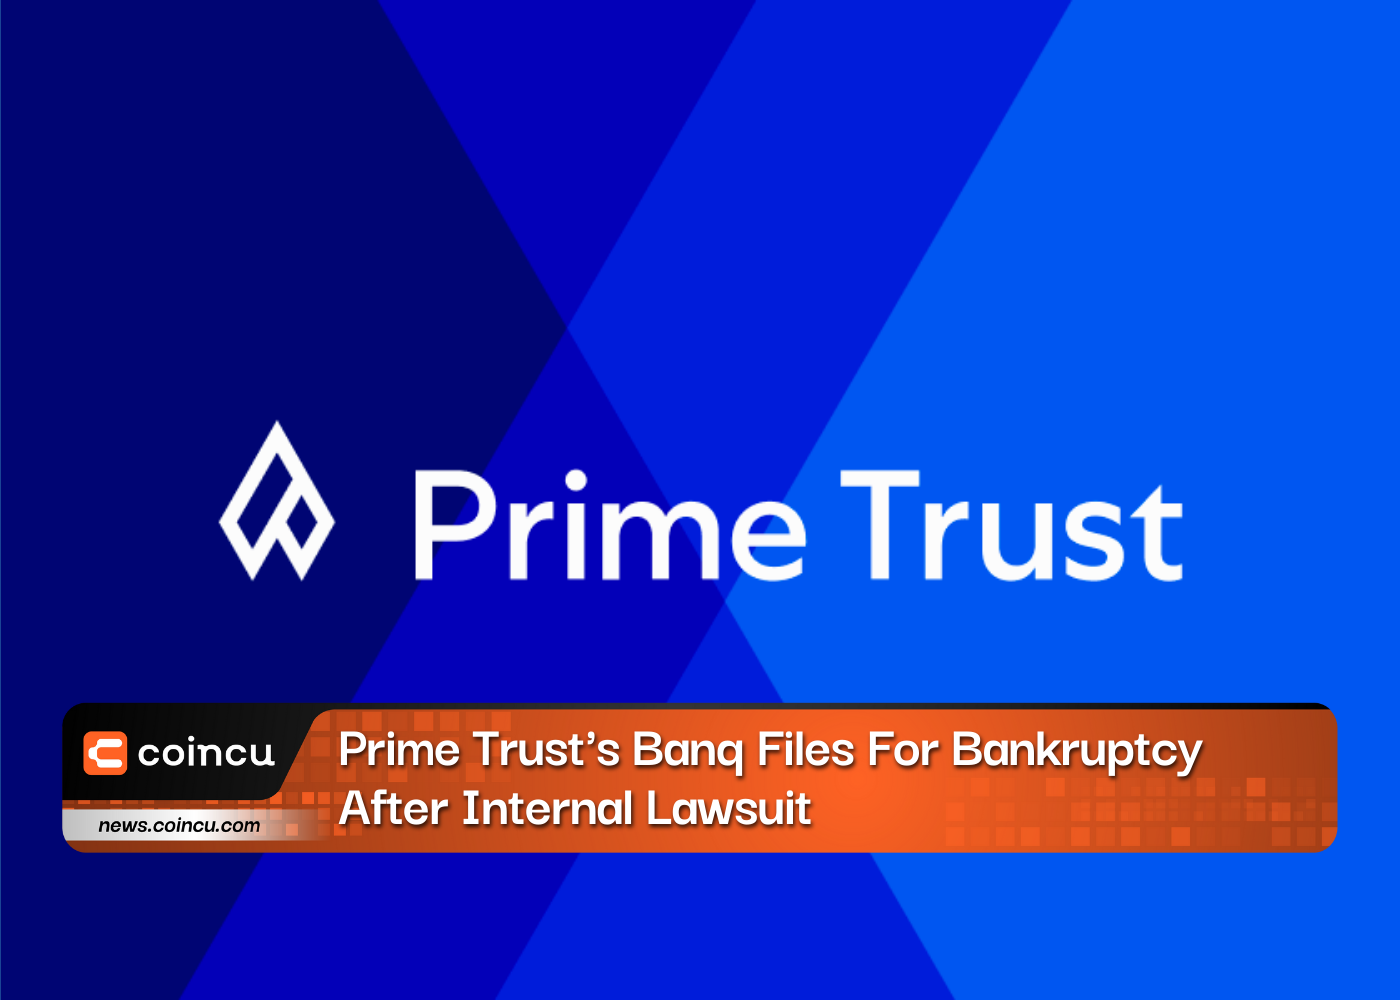 Prime Trust's Banq Files For Bankruptcy After Internal Lawsuit